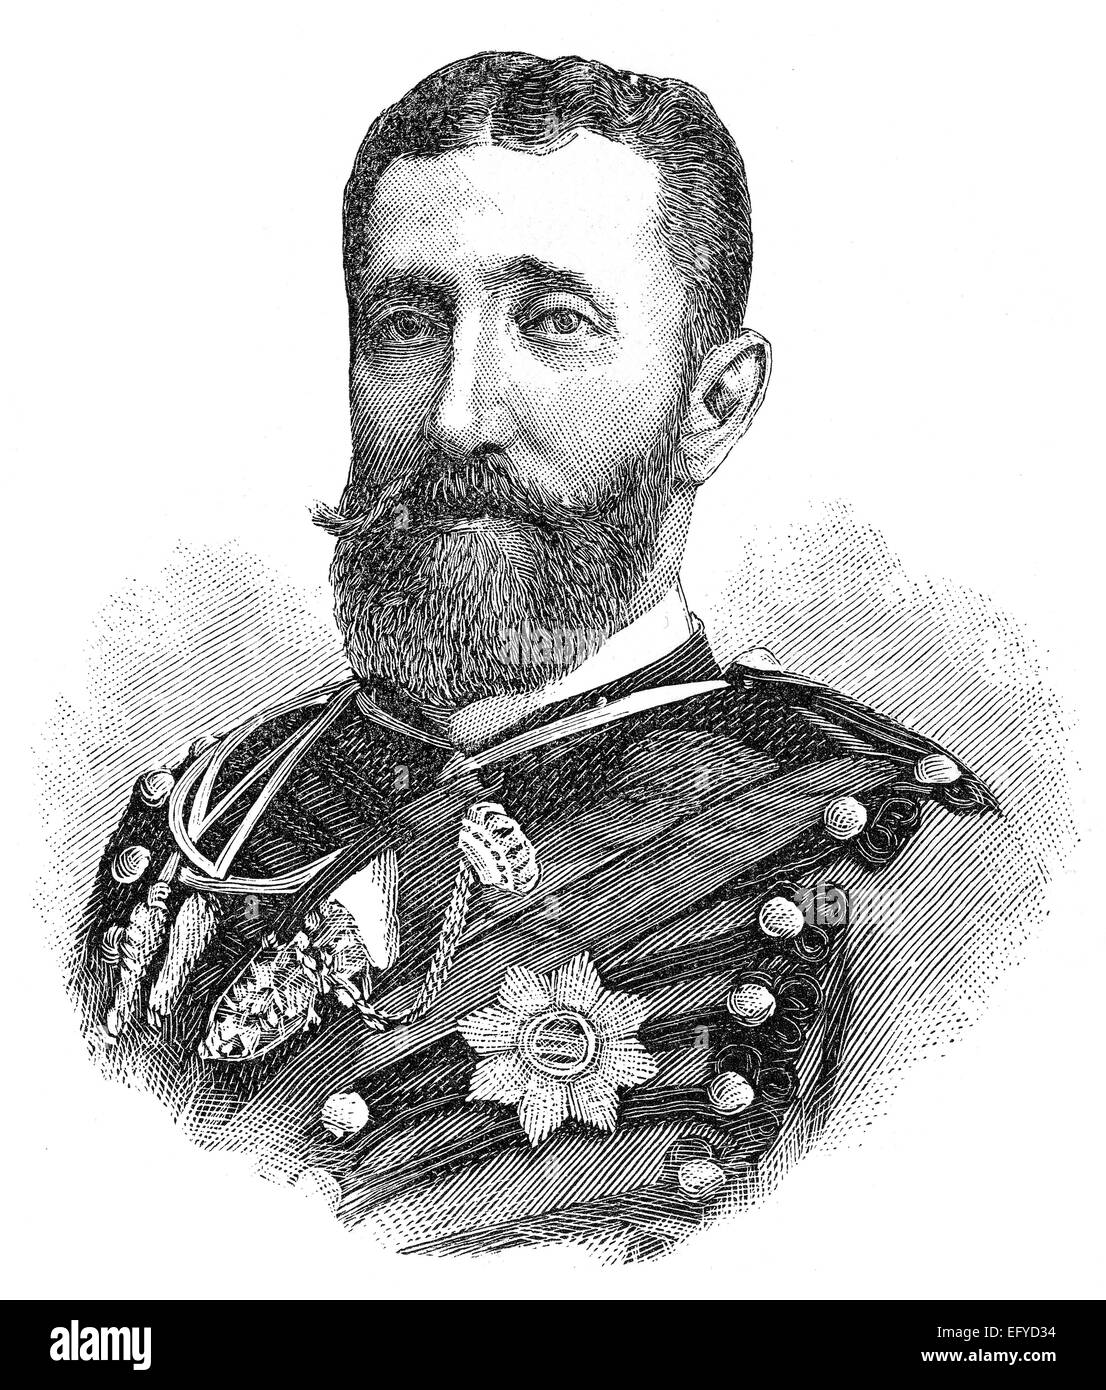 Enrique de Borbón y Castellví, 2nd Duke of Seville, 1848-1894, Stock Photo